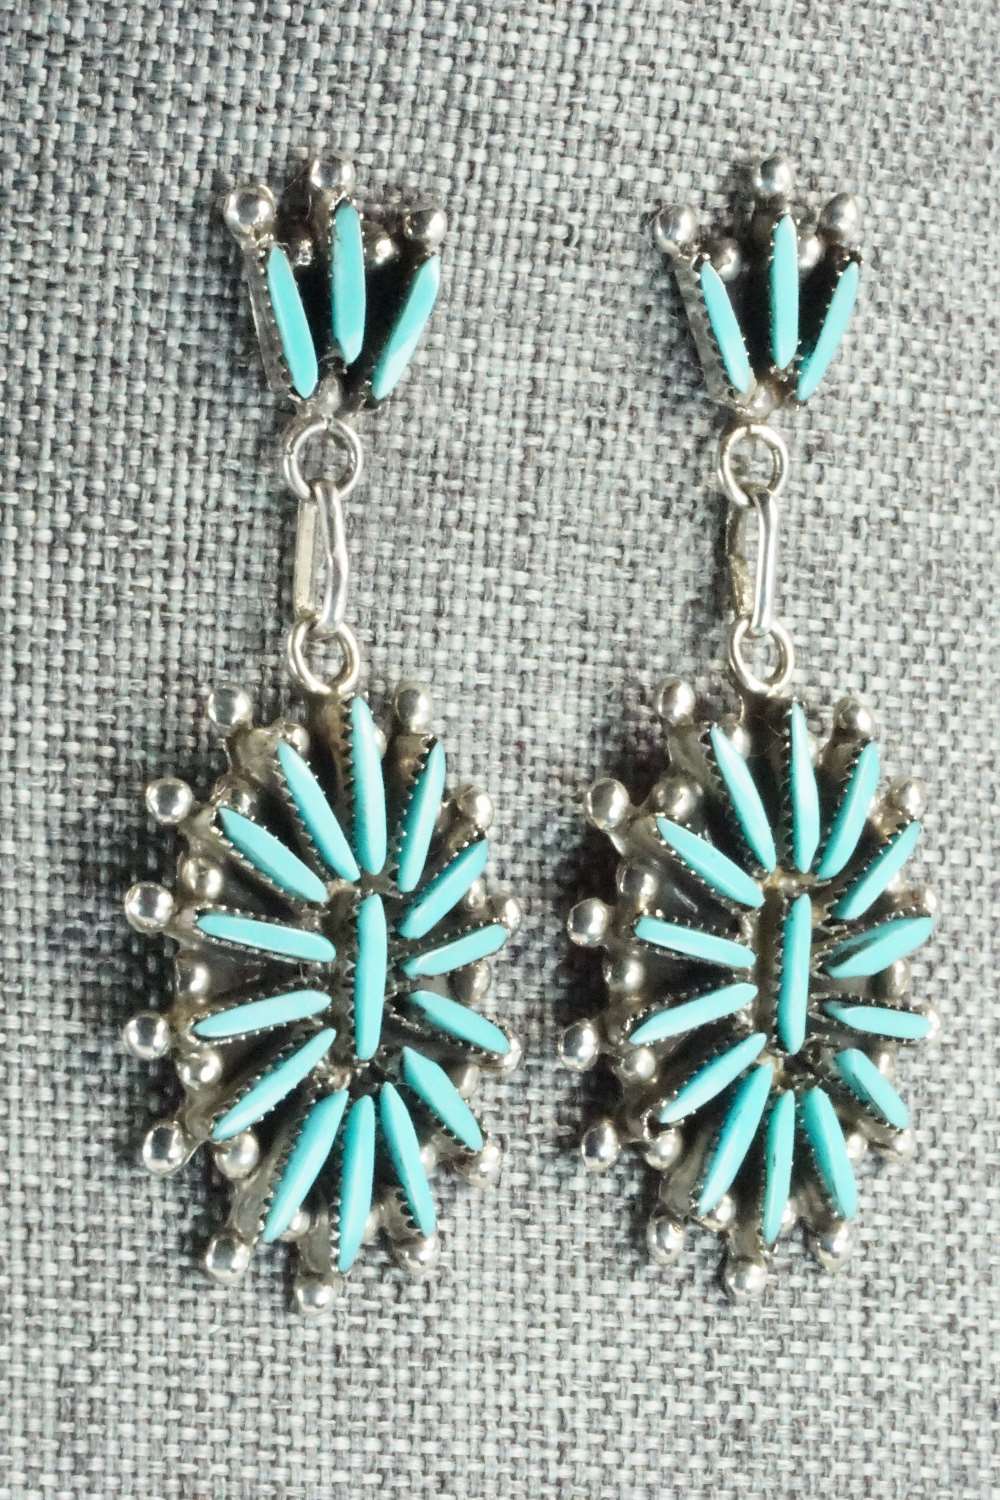 Turquoise & Sterling Silver Earrings - George Peina